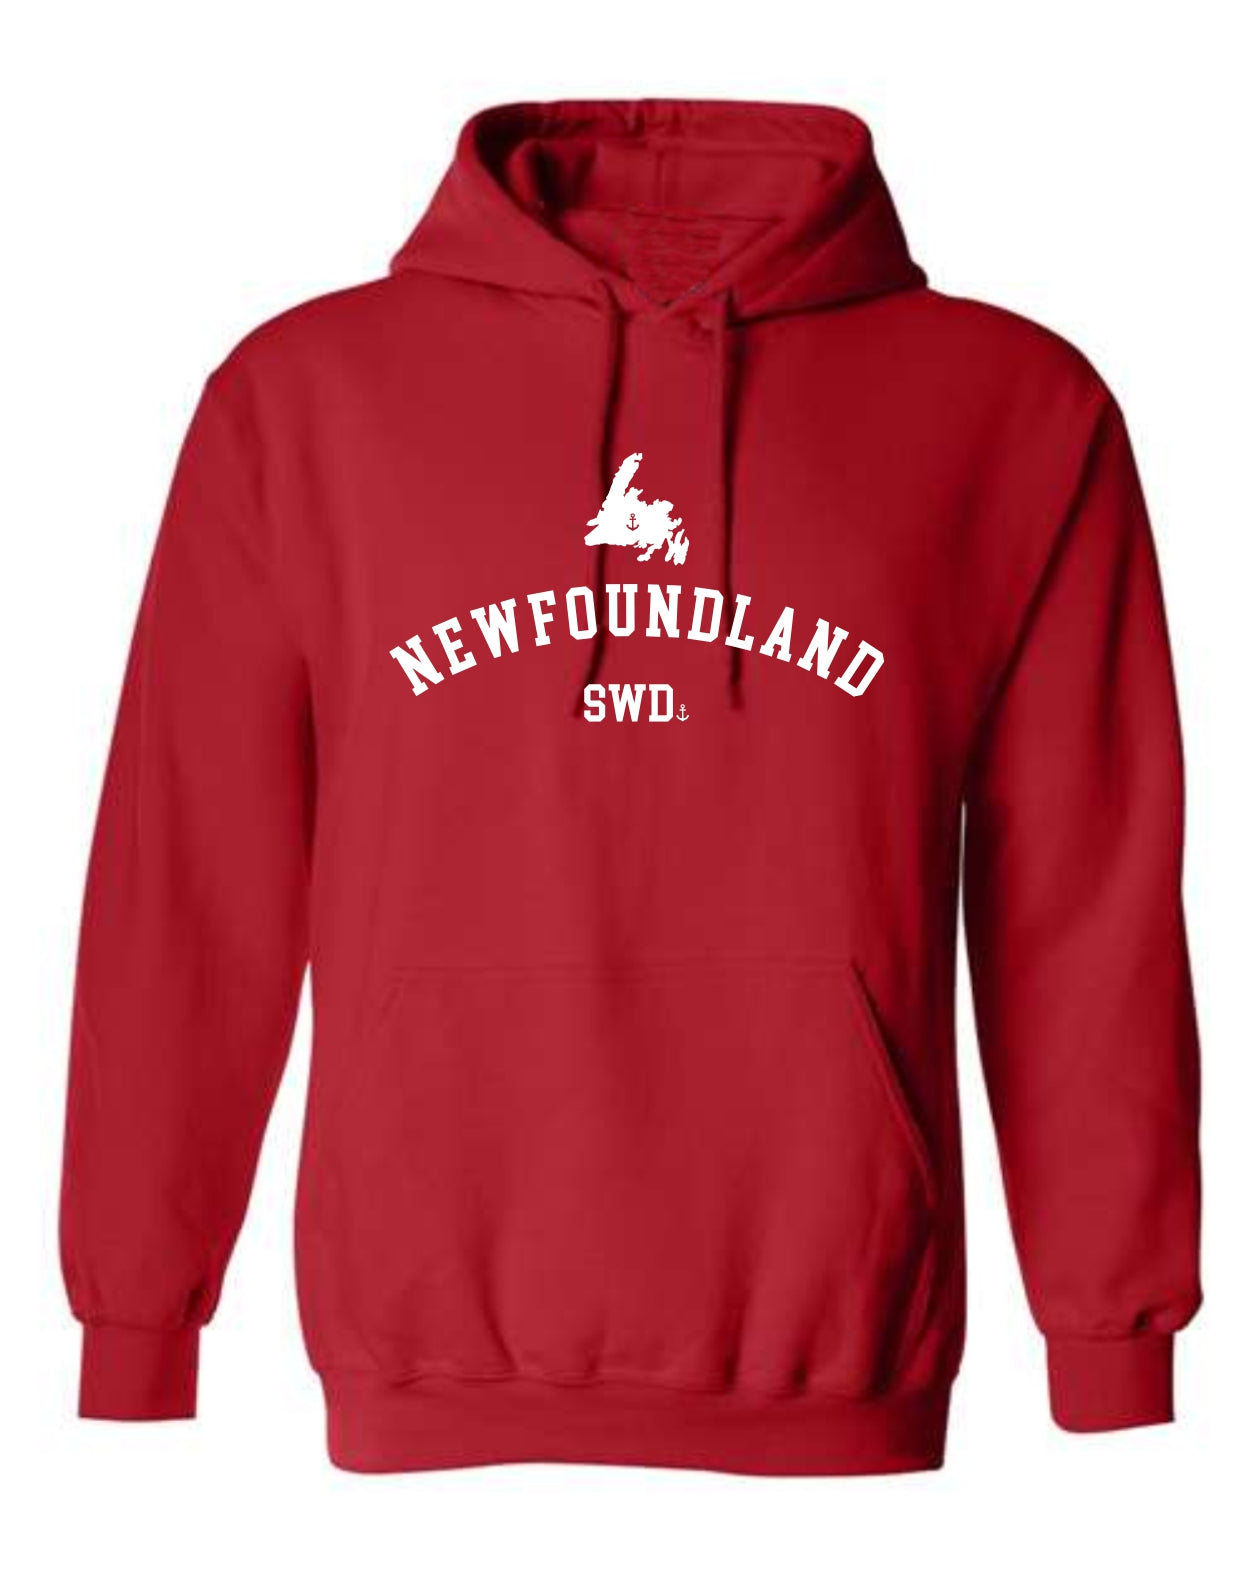 "Newfoundland - SWD" Unisex Hoodie